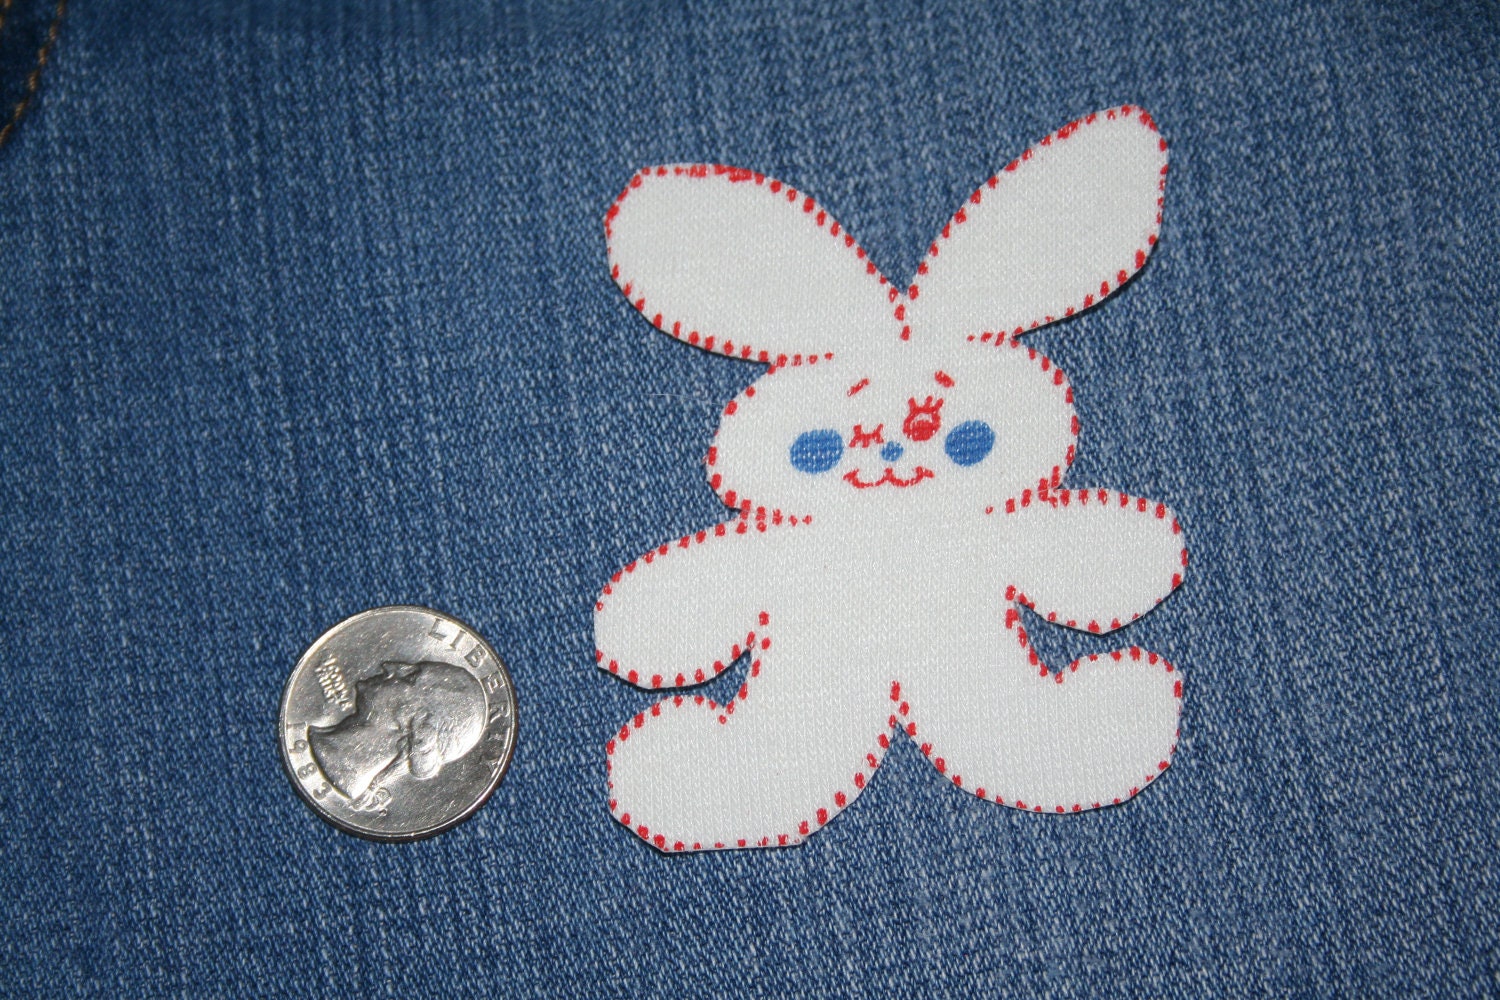 Bunny Fabric